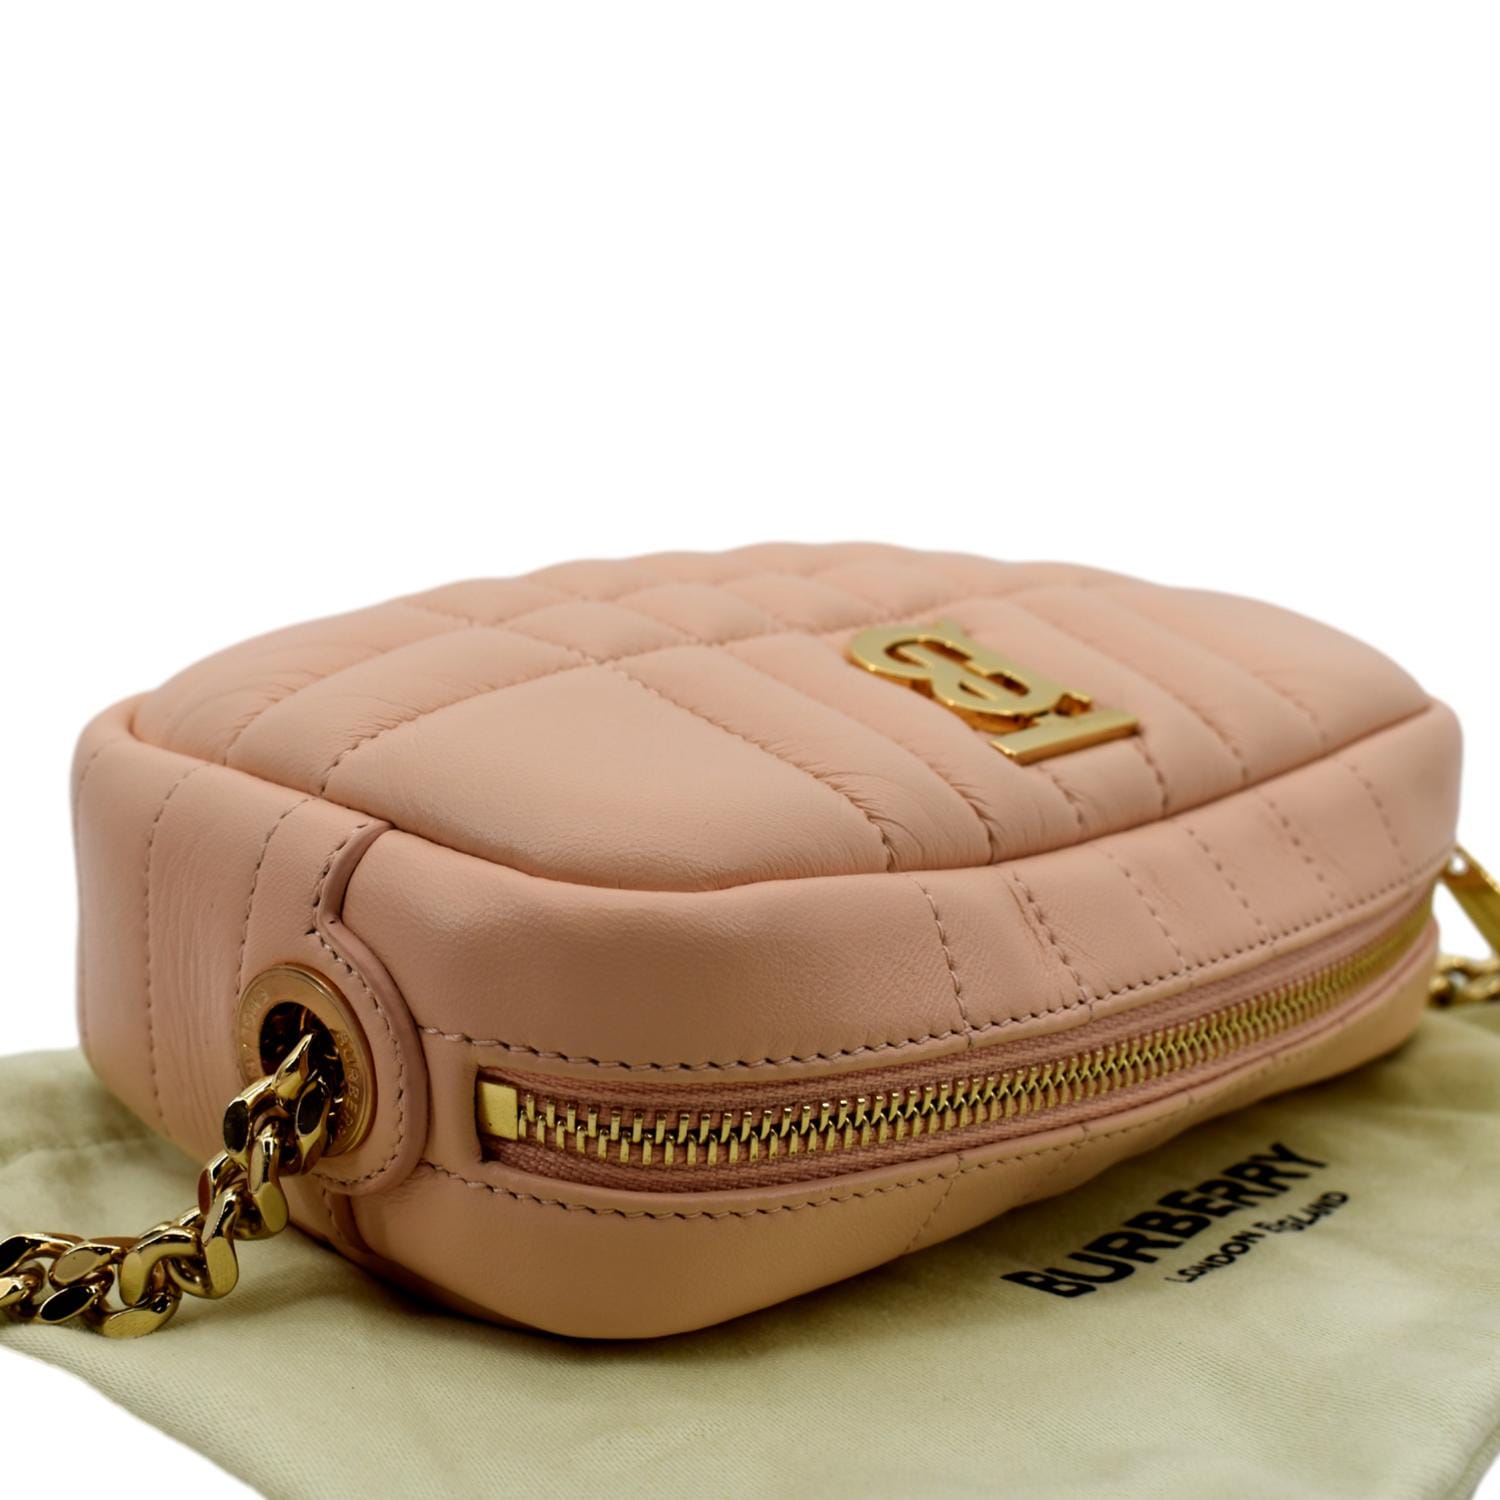 Amanda Dusty Pink Convertible Backpack Purse